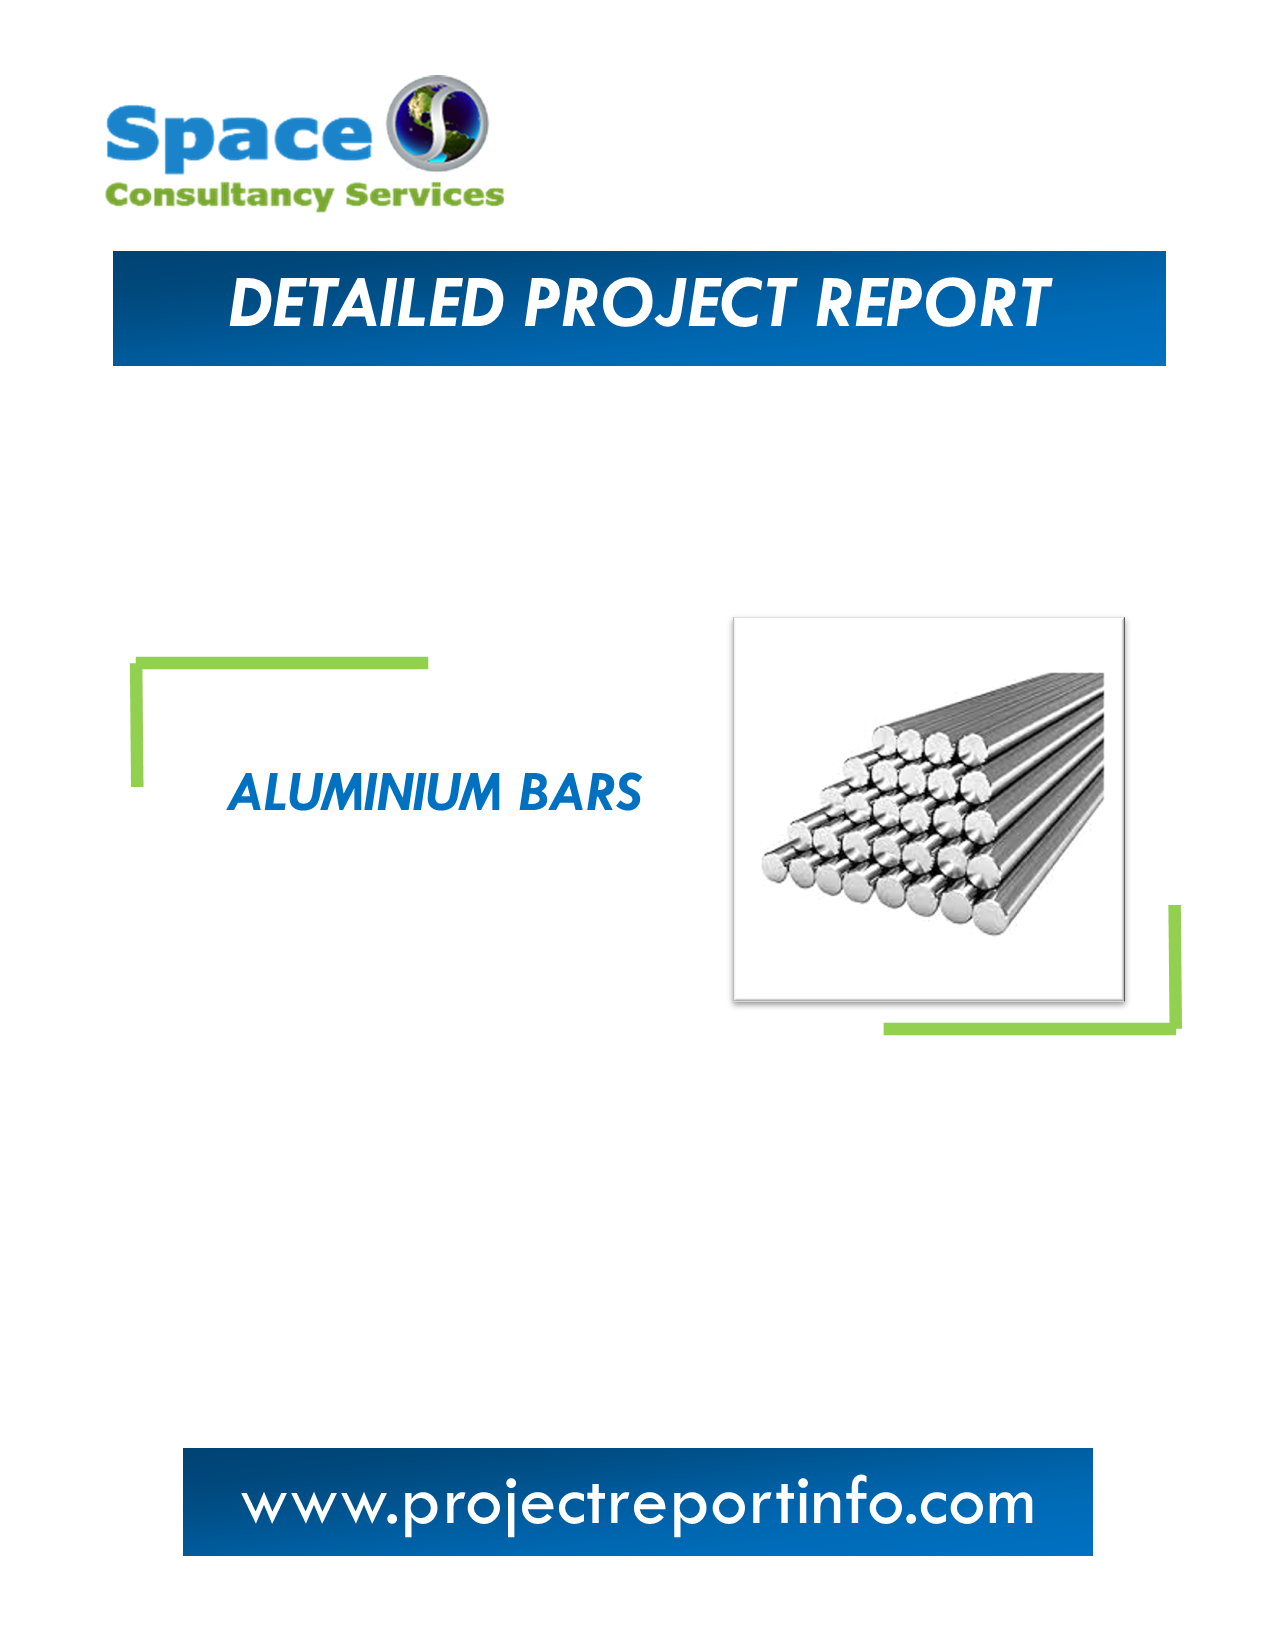 Project Report on Aluminium Bars Manufacturing